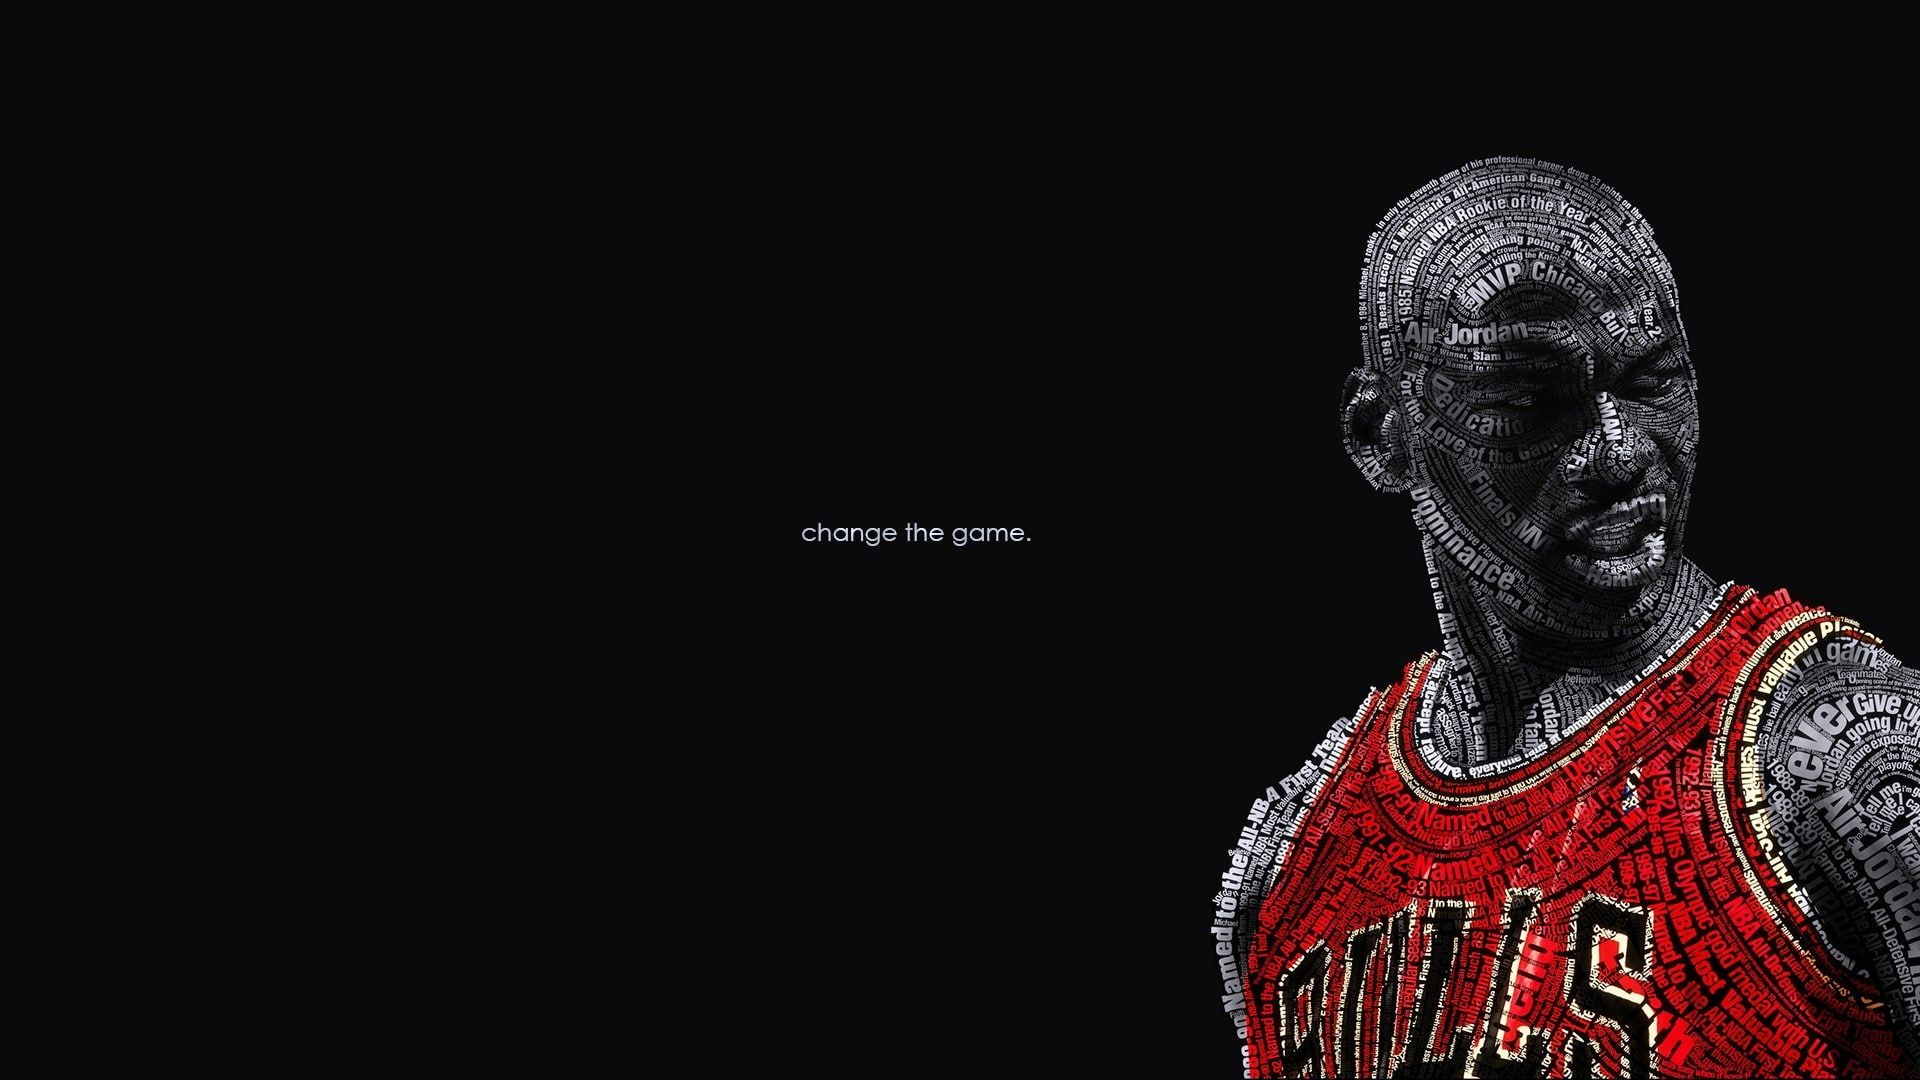 HD wallpaper: text wall typography change nba basketball michael jordan chicago bulls black background Sports Basketball HD Art